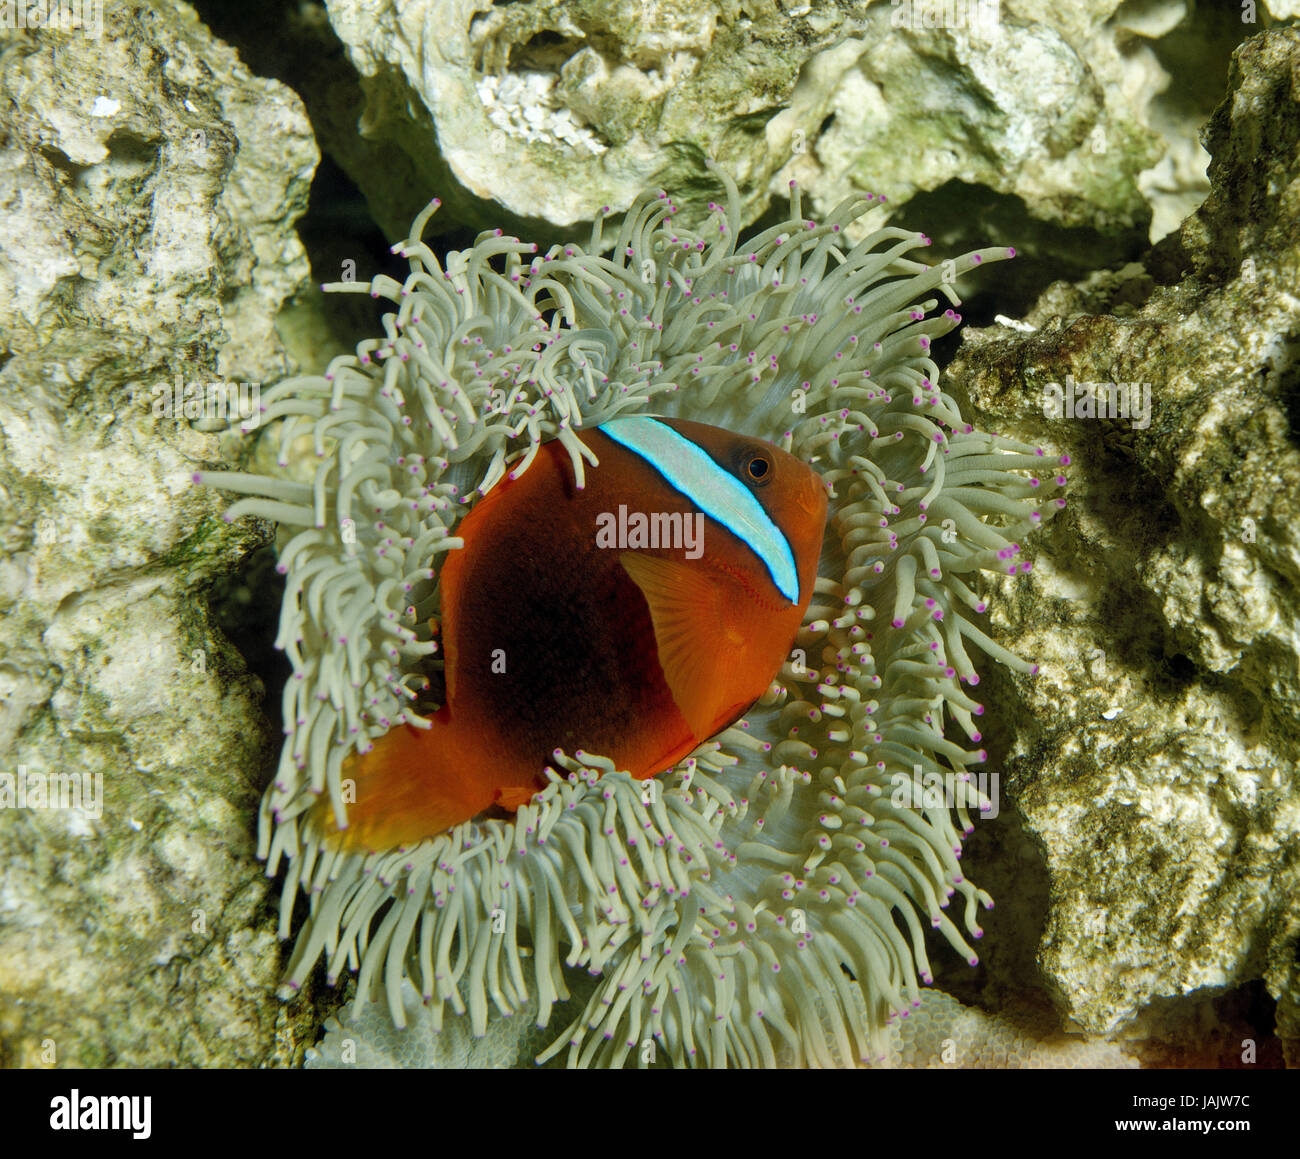 Red anemone fish,Amphiprion frenatus,sea anemone, Stock Photo